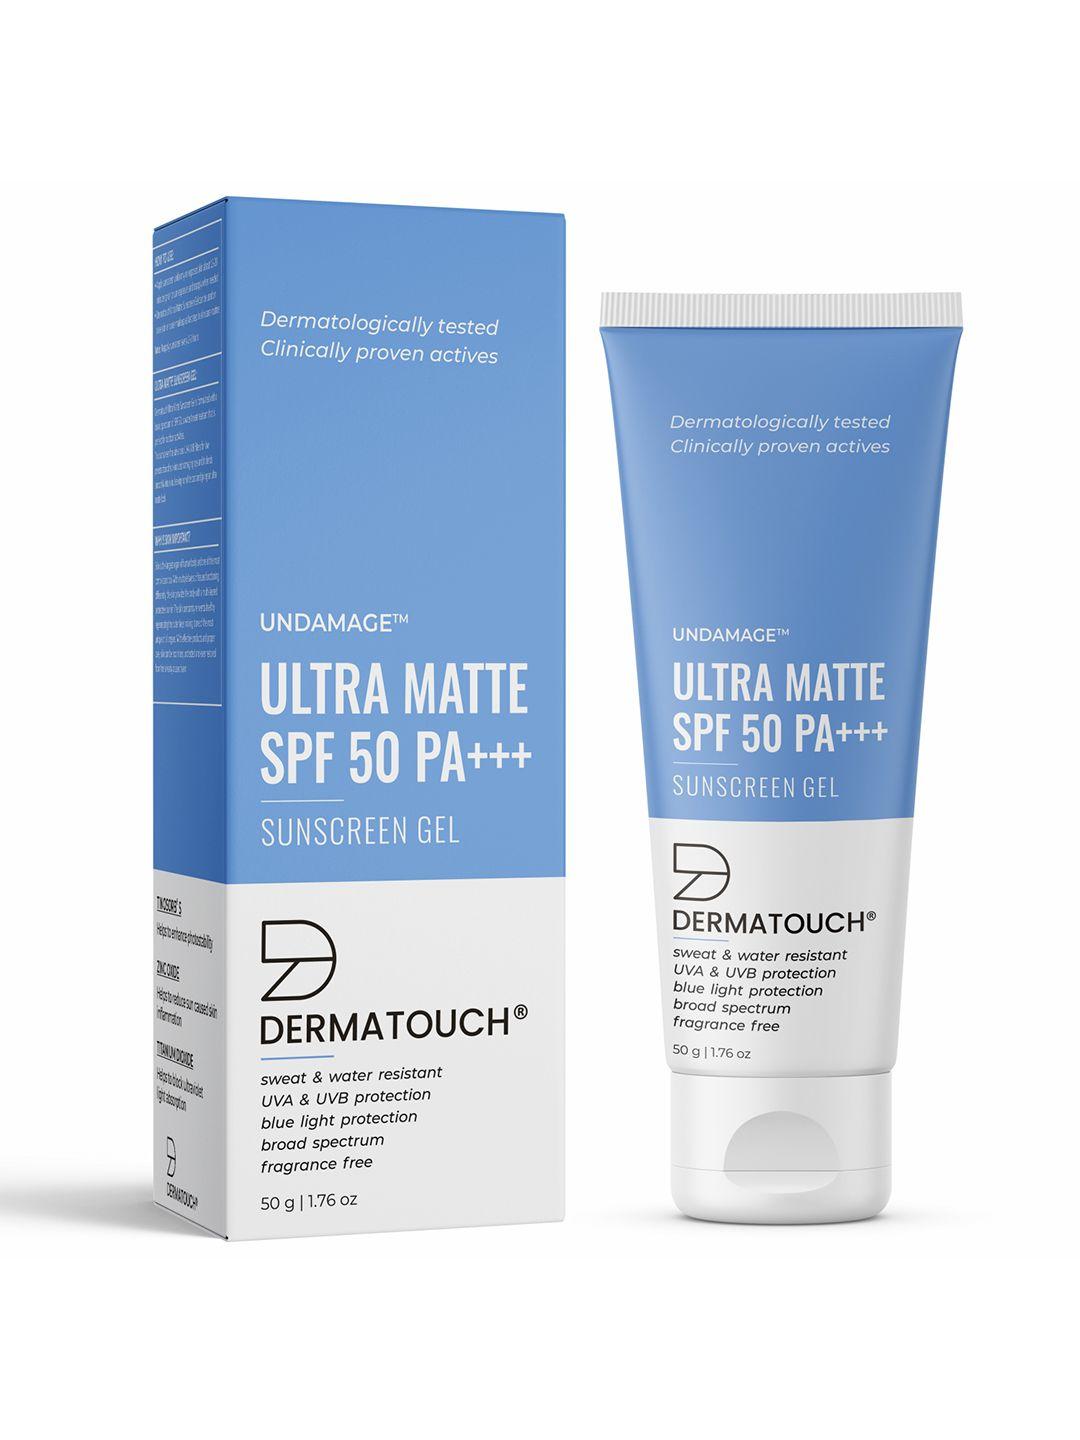 dermatouch-undamage-ultra-matte-spf-50-pa+++-sunscreen-gel---50g